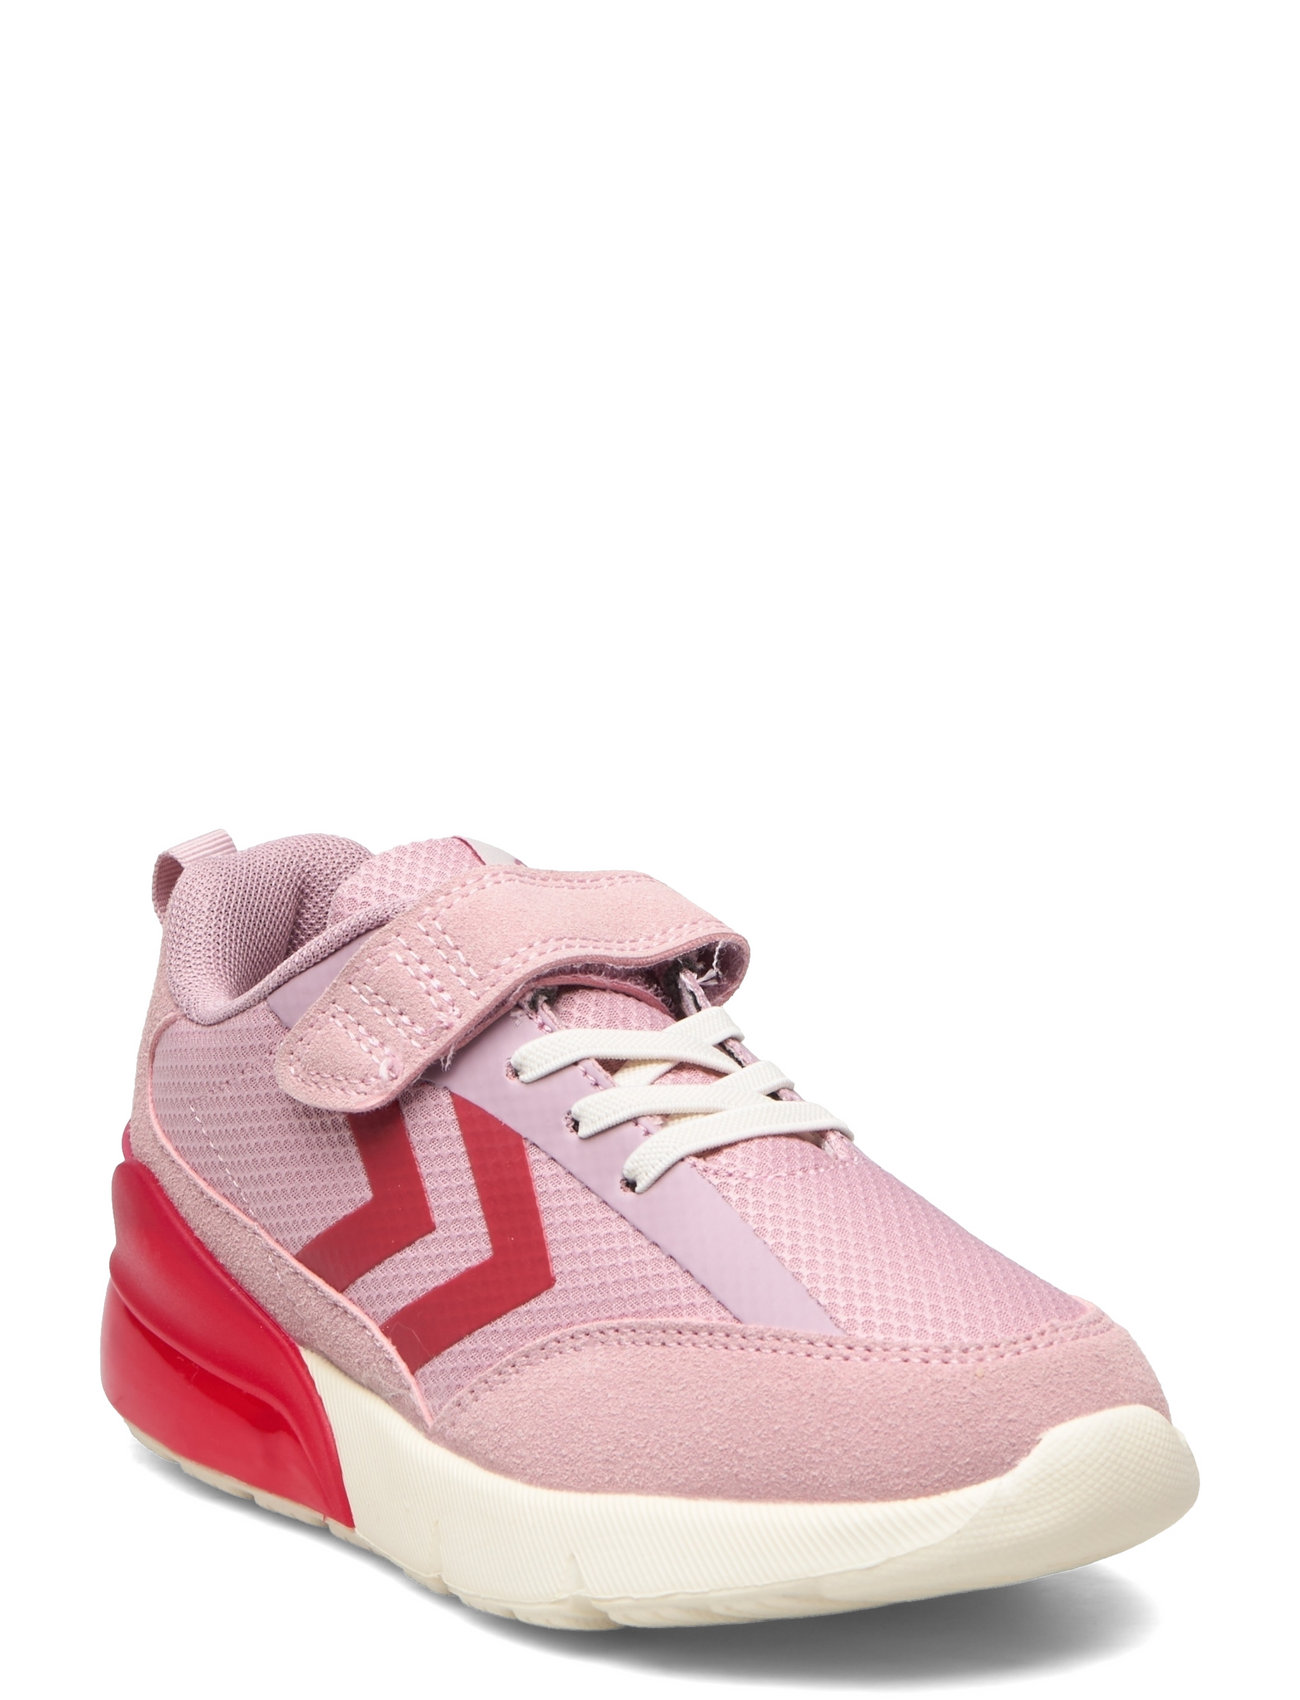 Hummel Daylight Jr - sneakers | Boozt.com